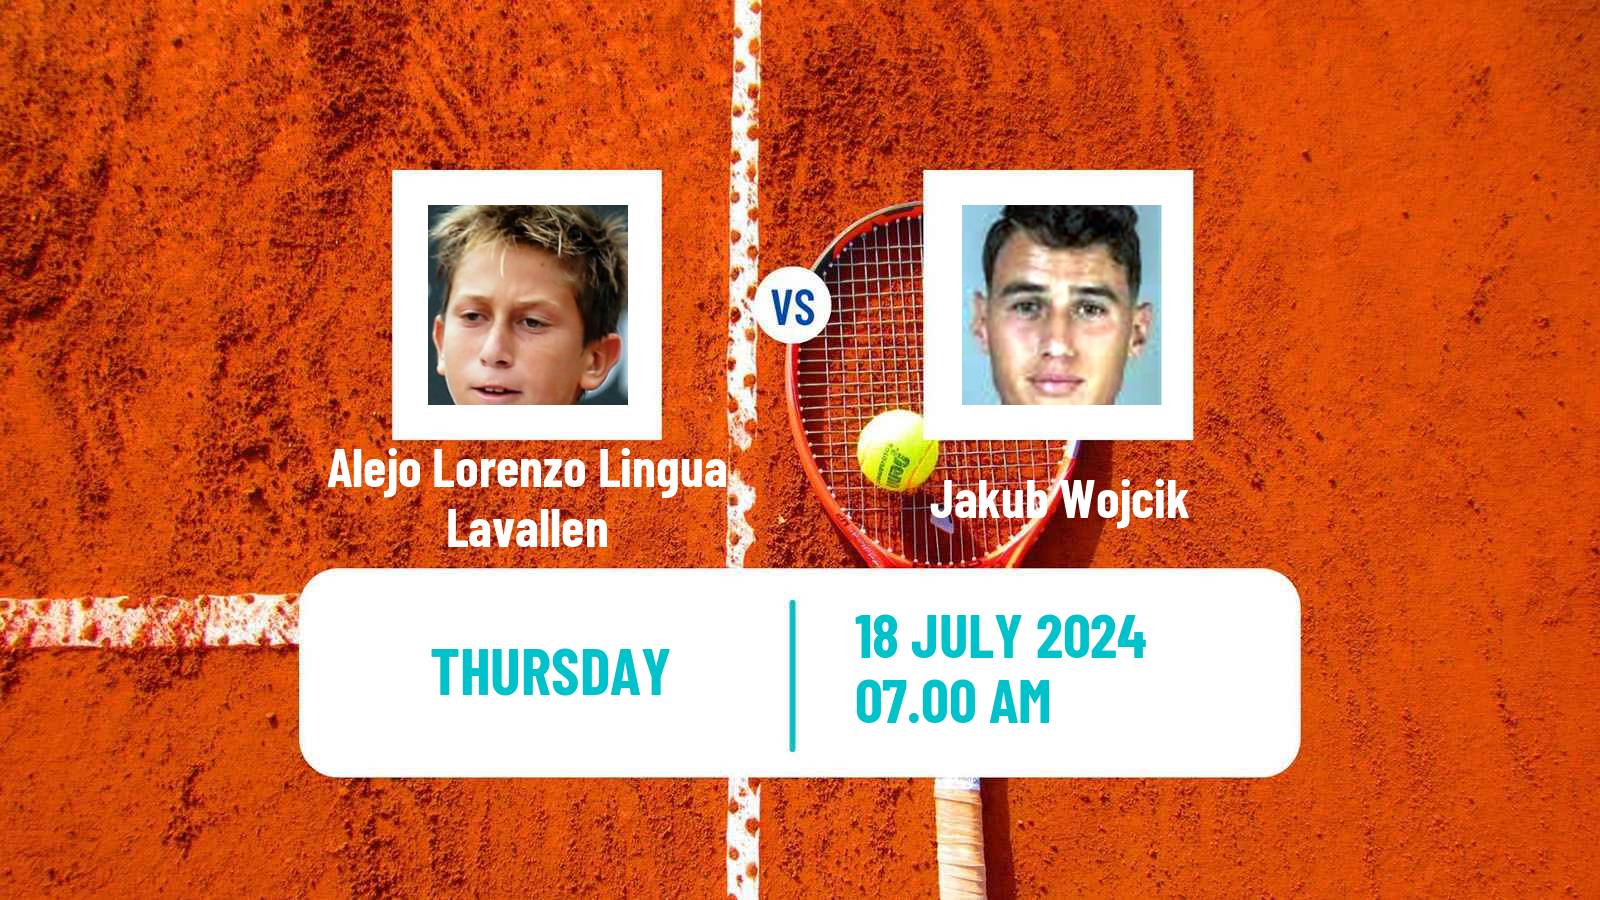 Tennis ITF M25 Esch Alzette 2 Men Alejo Lorenzo Lingua Lavallen - Jakub Wojcik